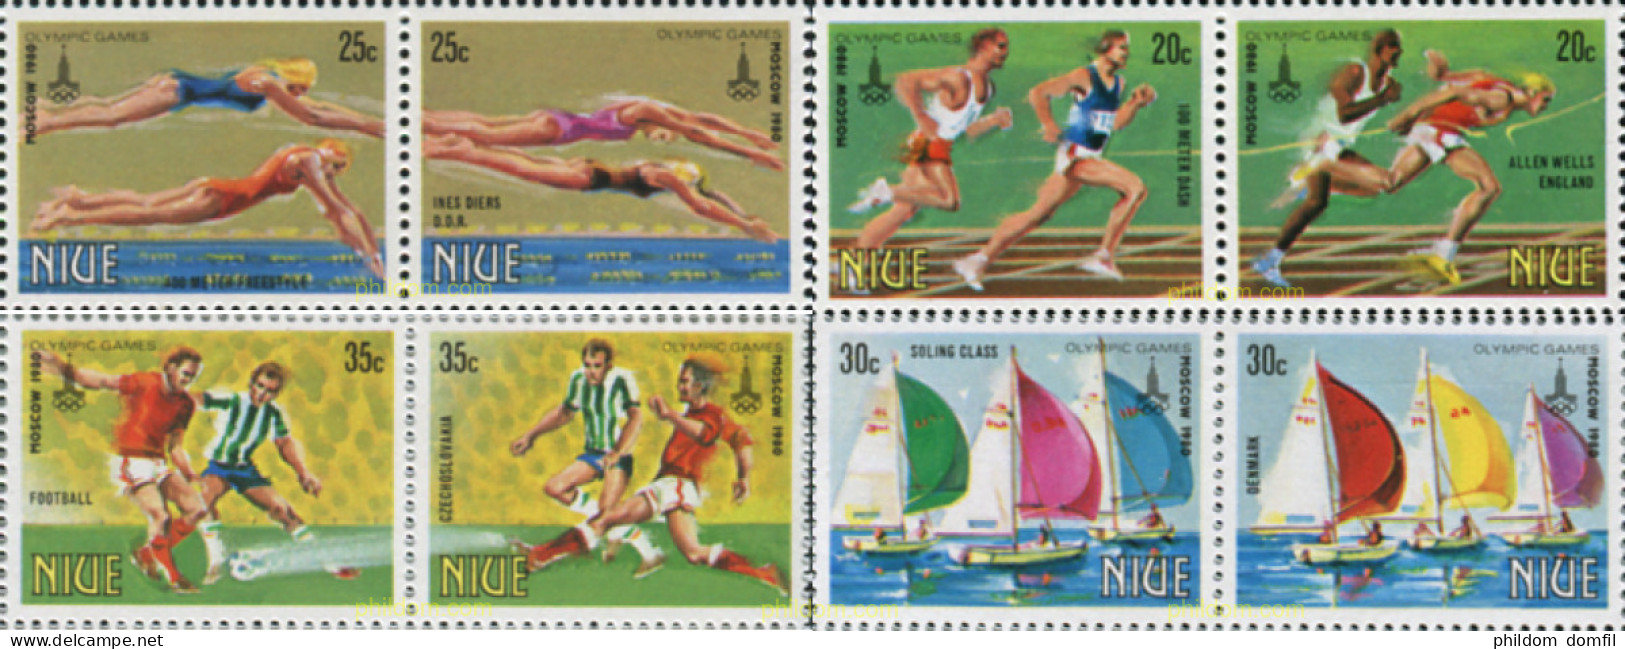 723278 HINGED NIUE 1980 22 JUEGOS OLIMPICOS VERANO MOSCU 1980 - Niue